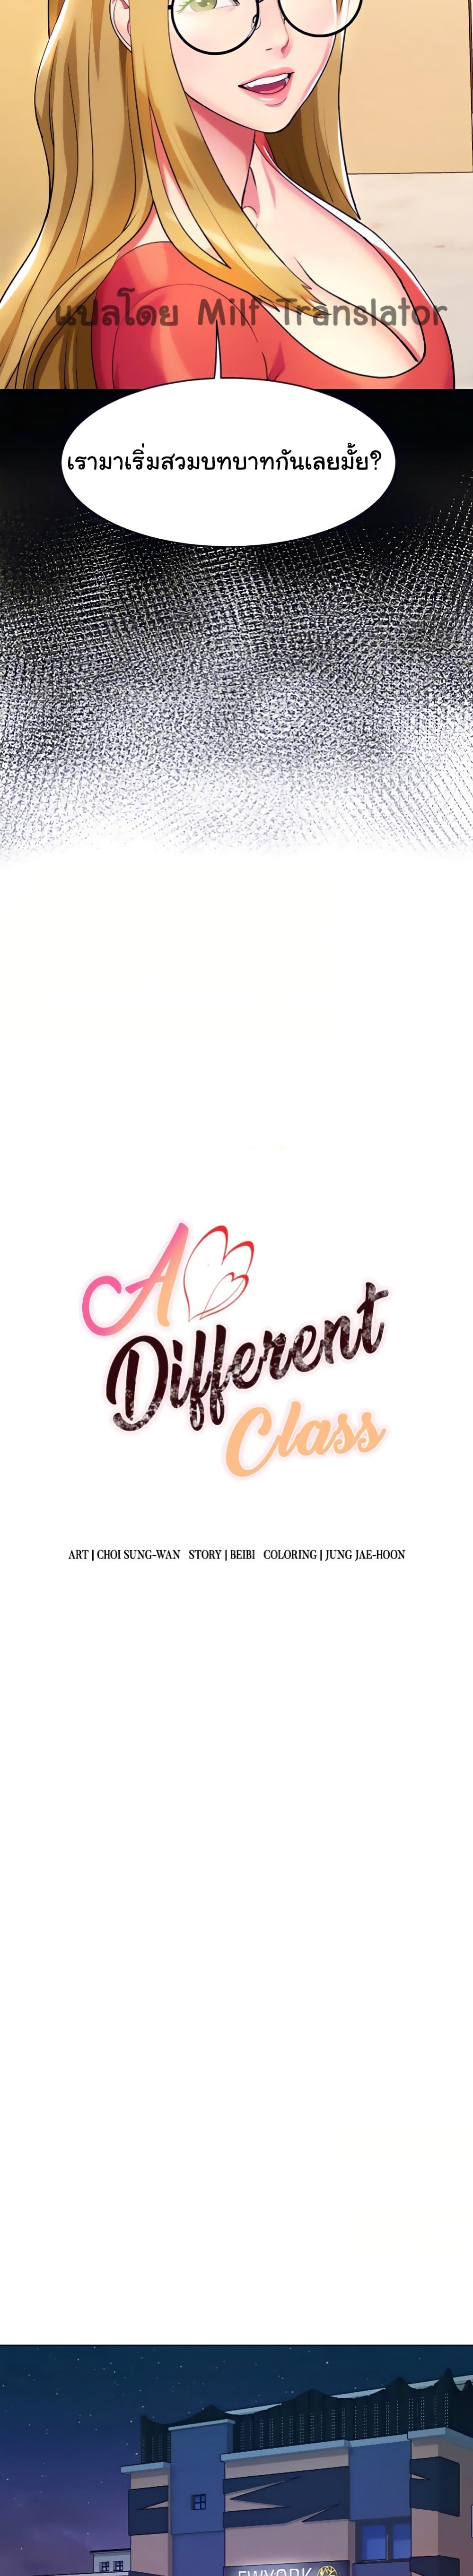 A Different Class 17-17